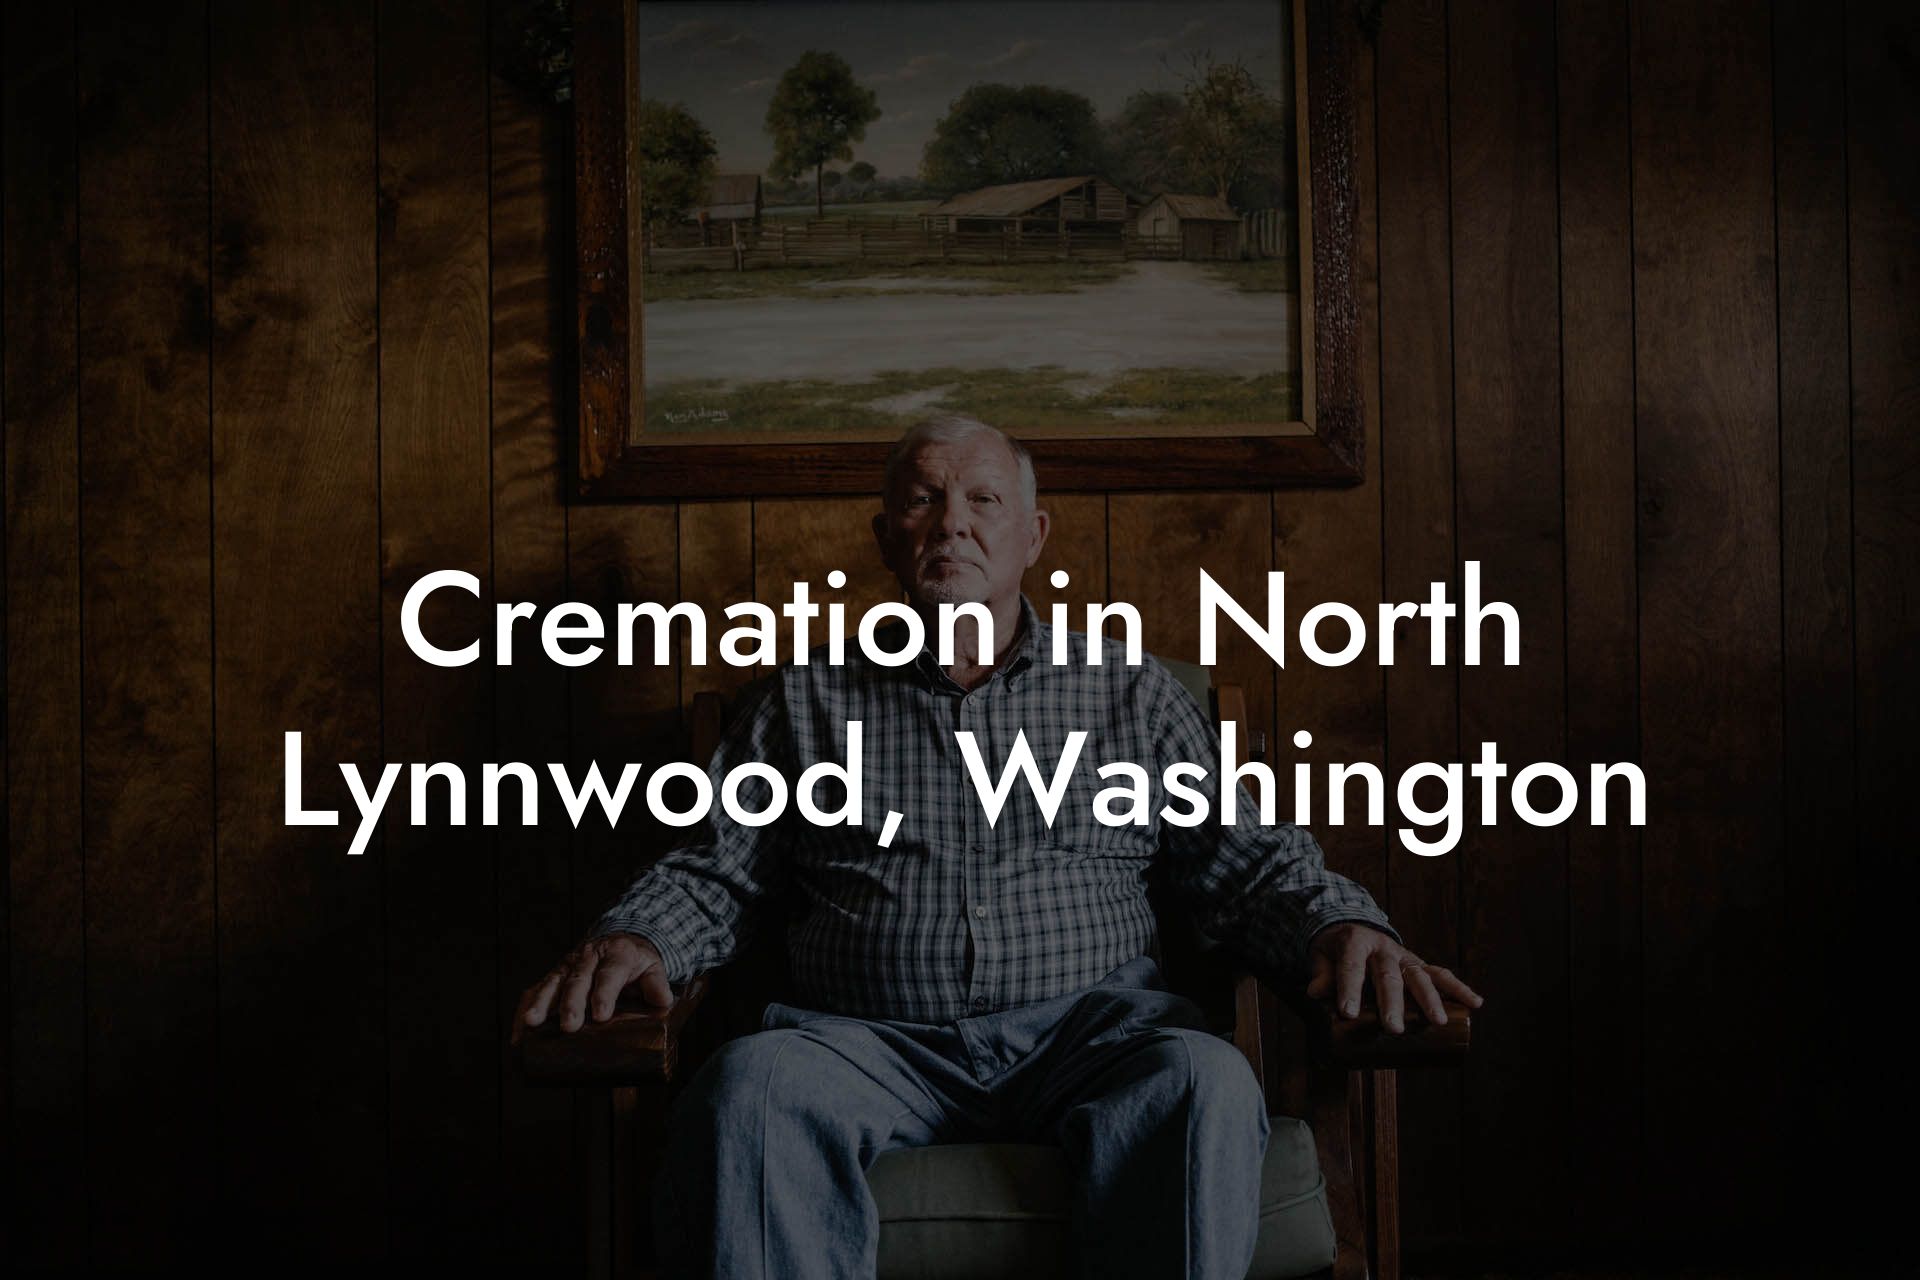 Cremation in North Lynnwood, Washington